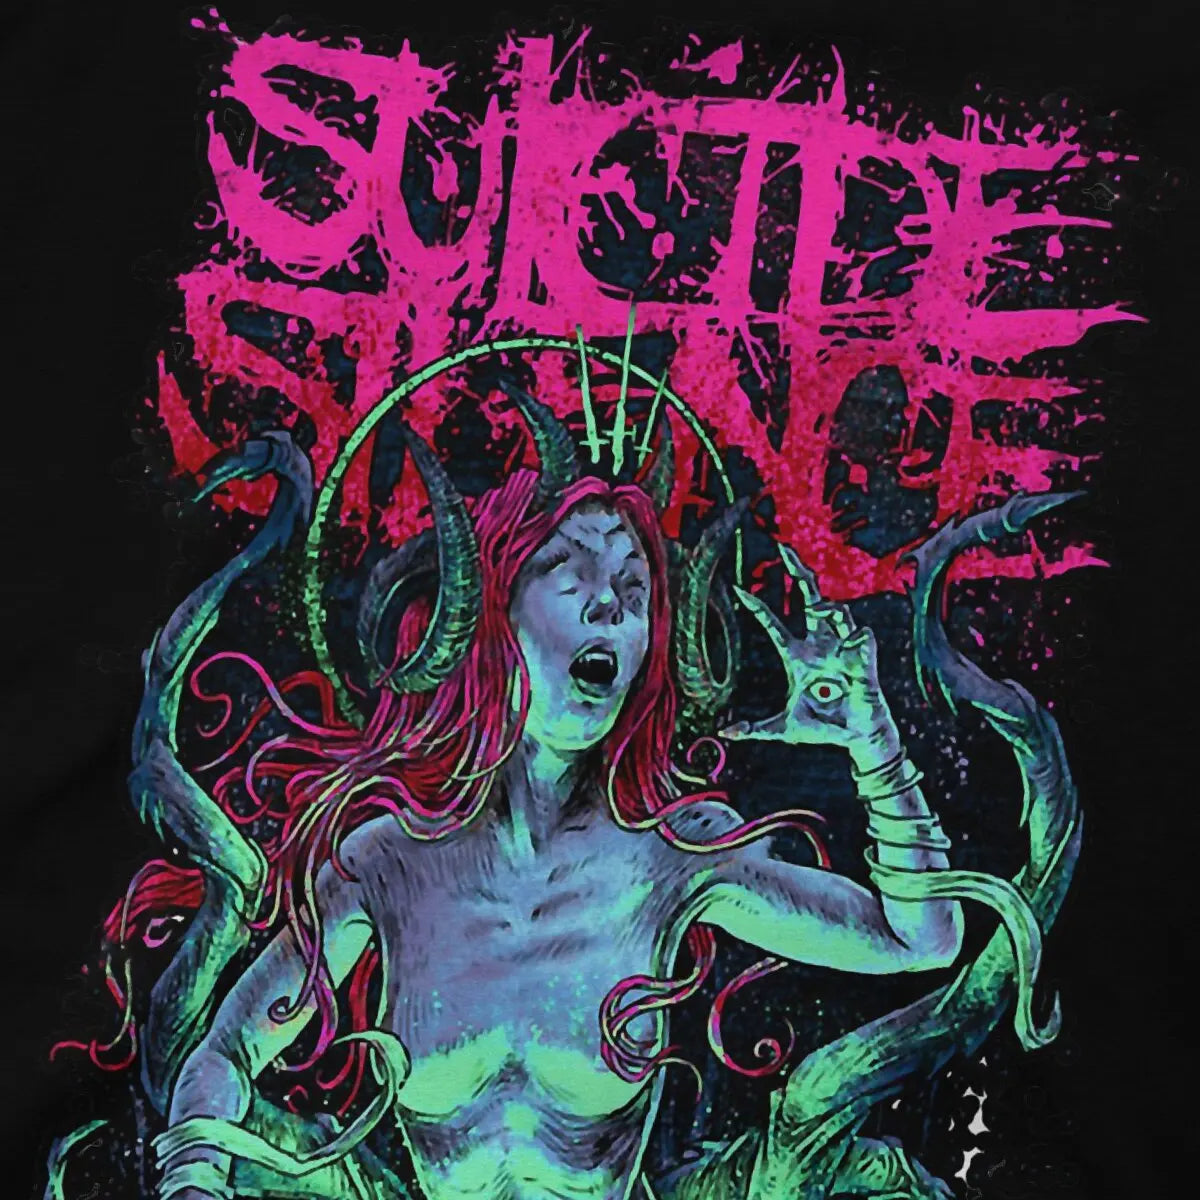 Retro Suicide Silence Rock Band T-Shirt - Hot Sale Leisure Tee for Men & Women